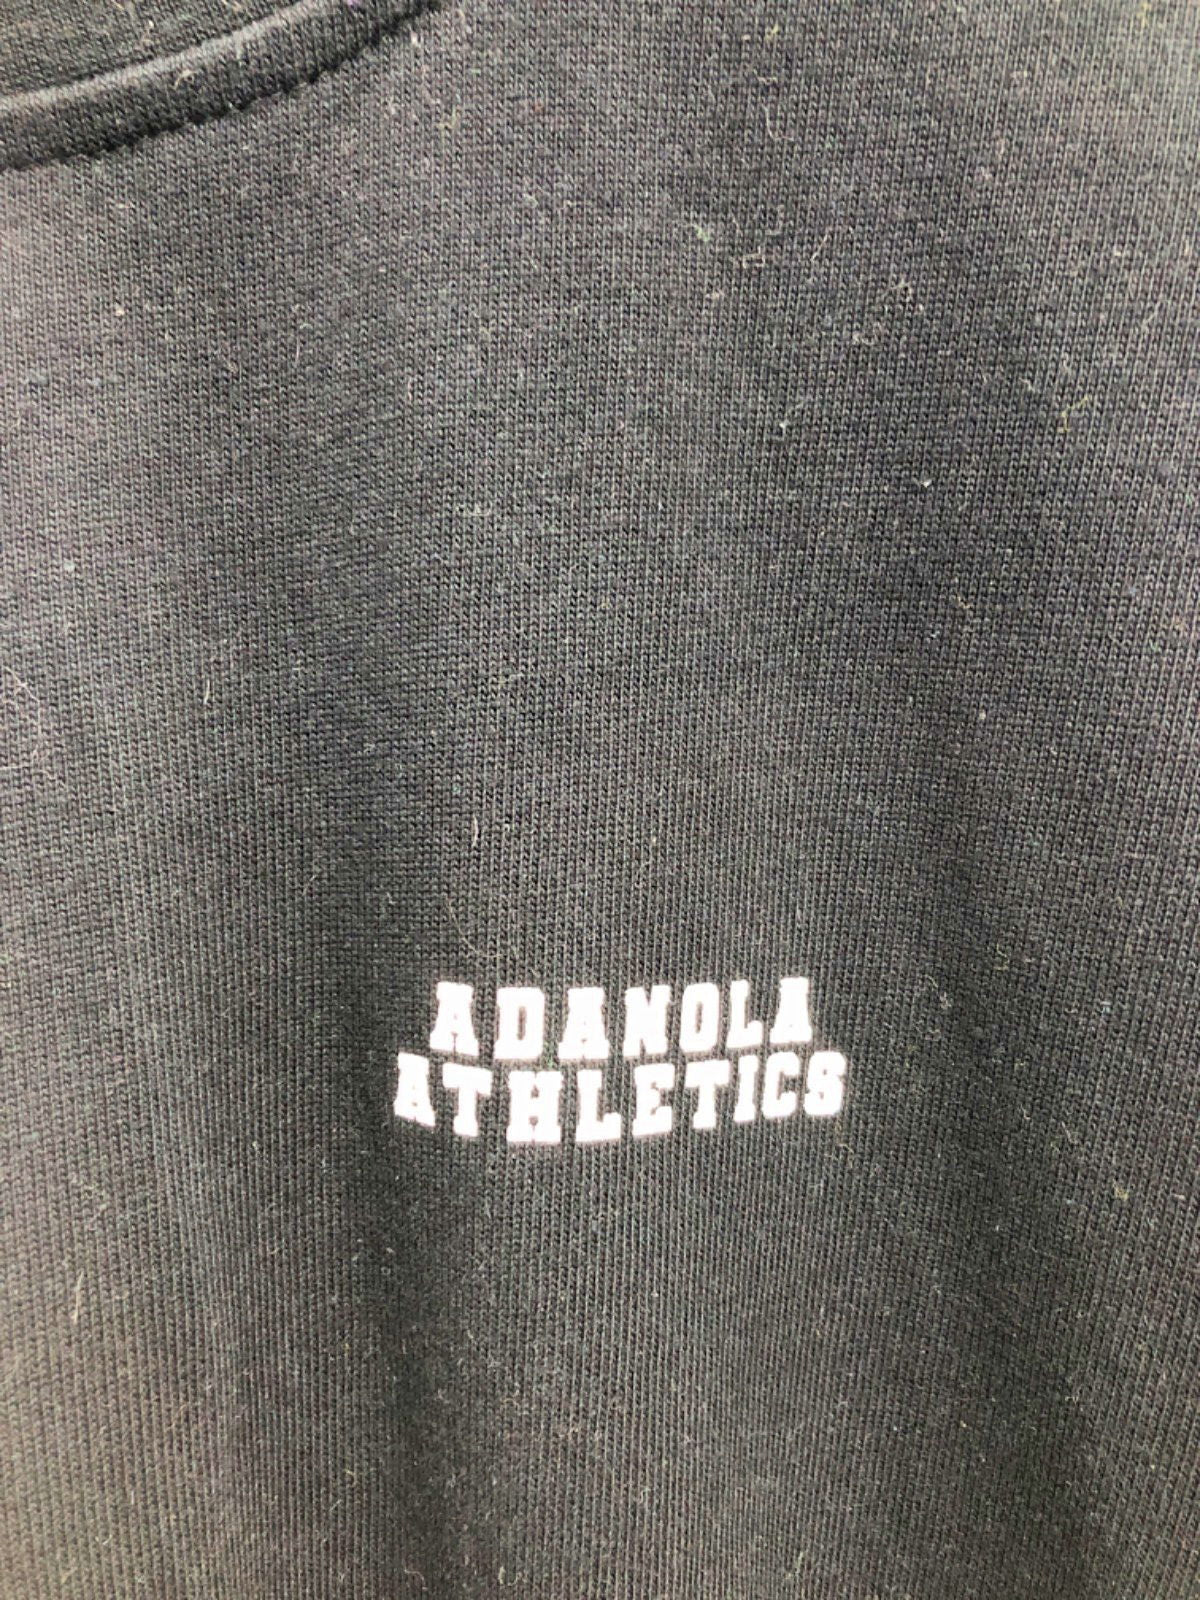 Adanola Black Athletics T-Shirt UK XL